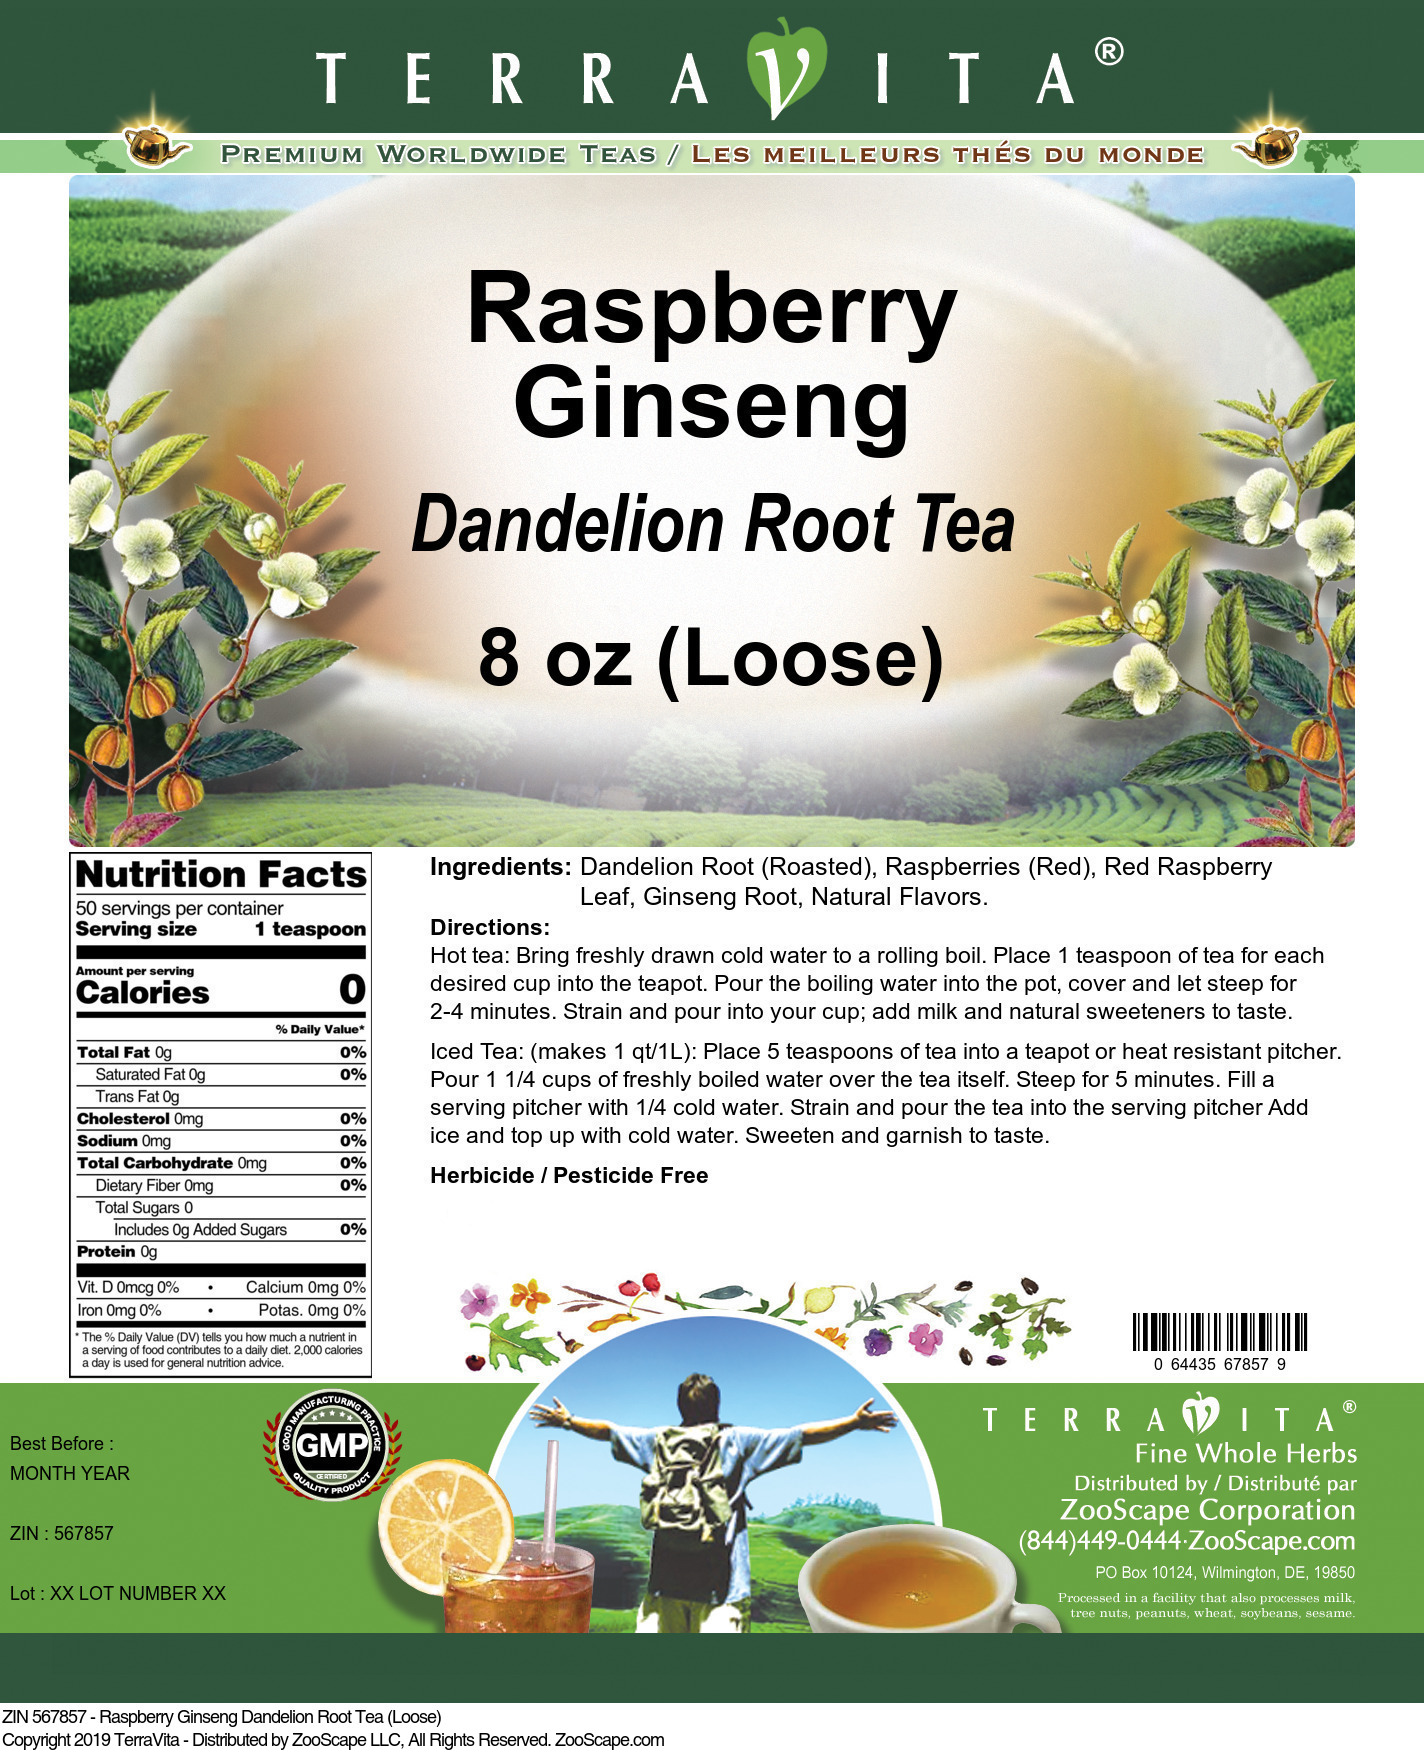 Raspberry Ginseng Dandelion Root Tea (Loose) - Label